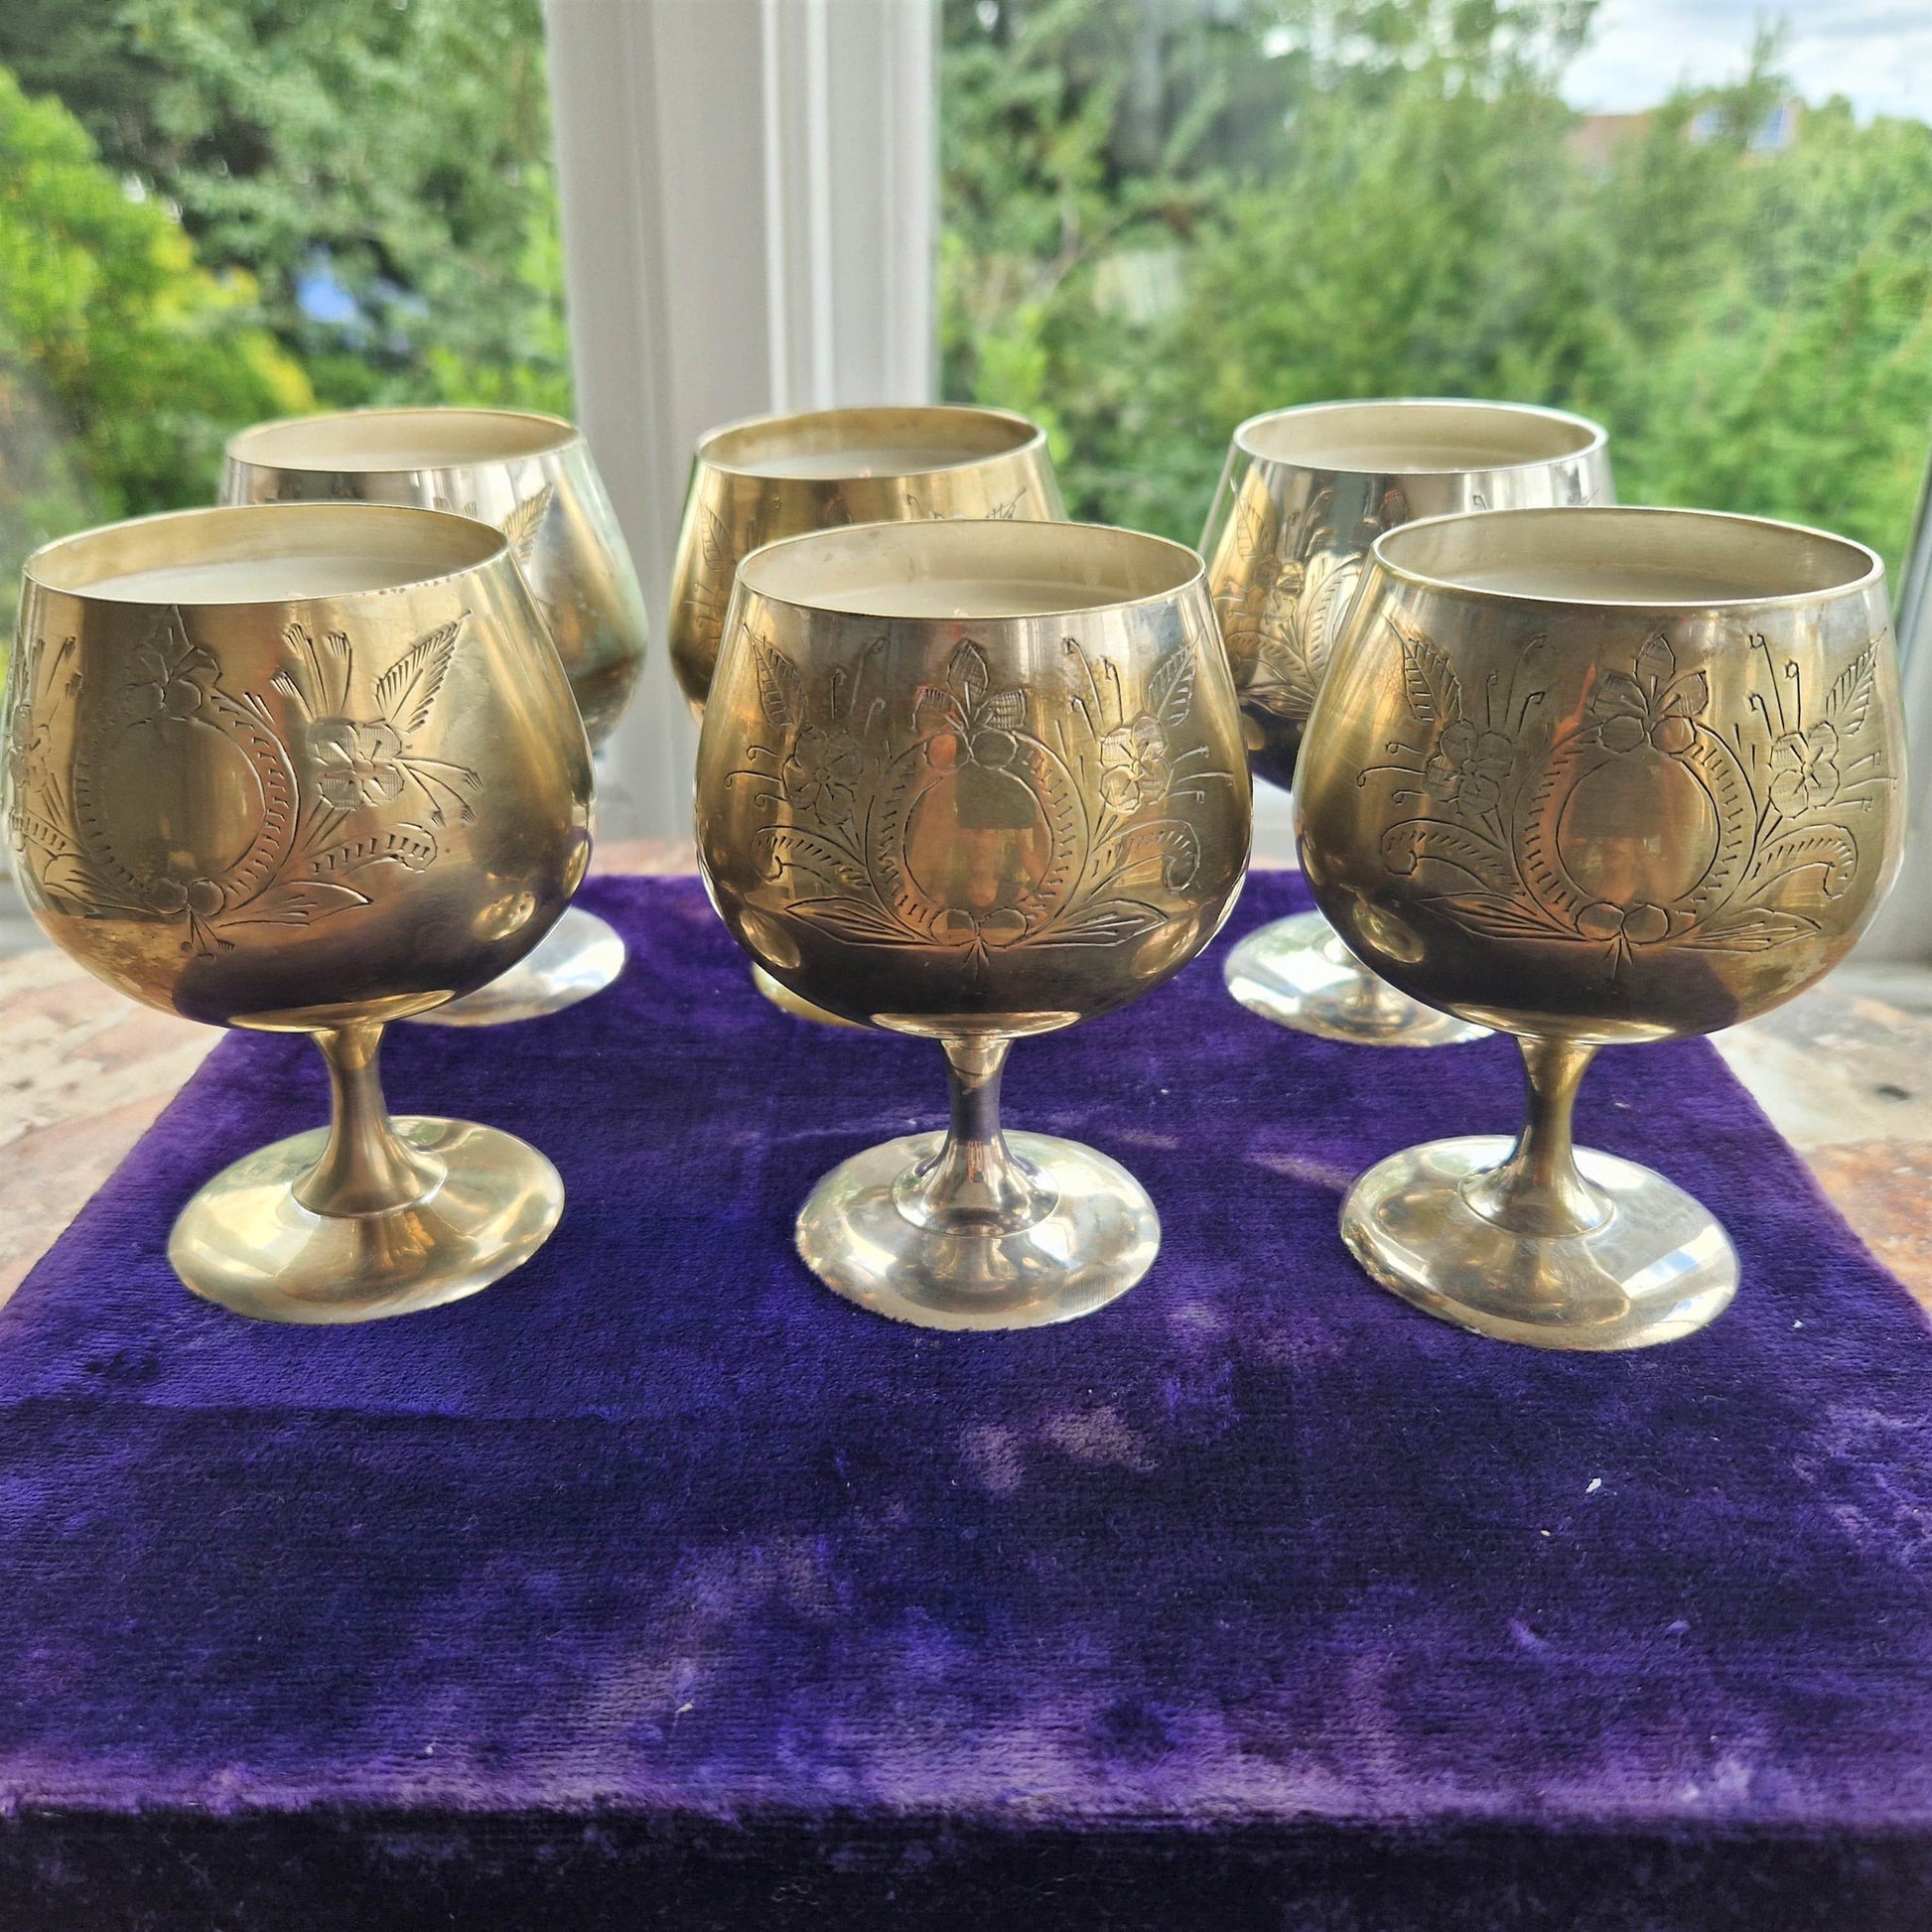 Antique Brass goblets